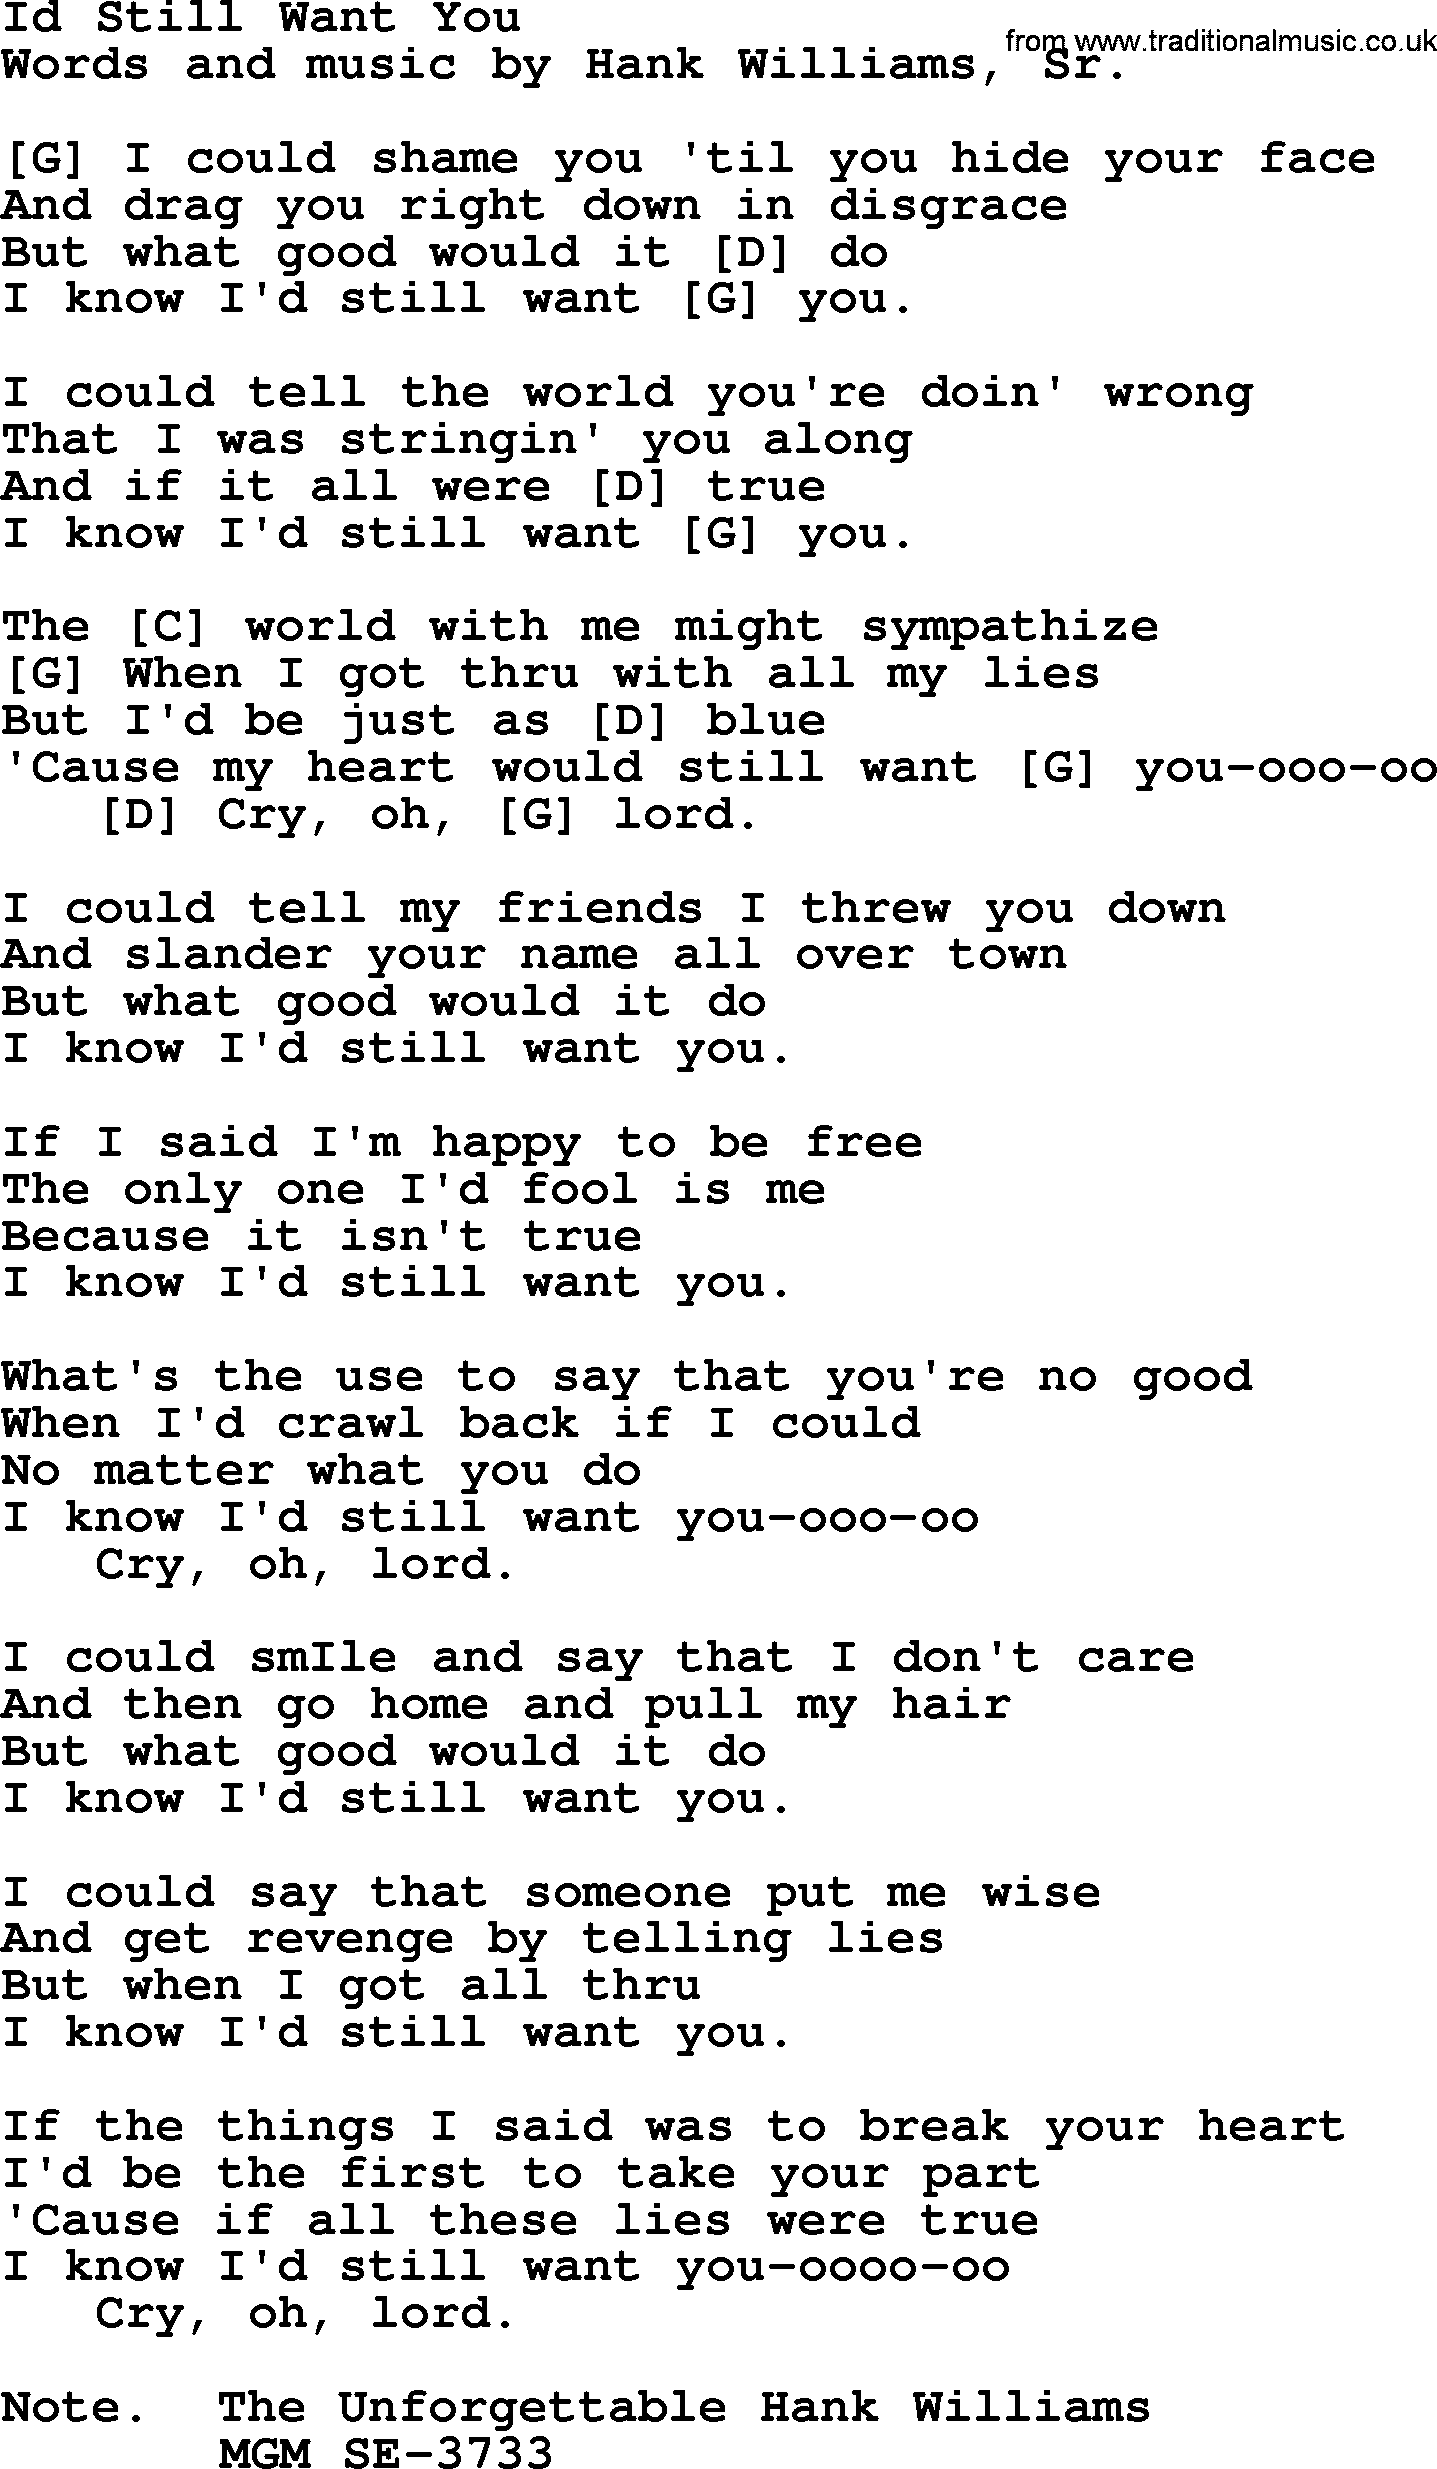 Hank Williams song Id Still Want You, lyrics and chords